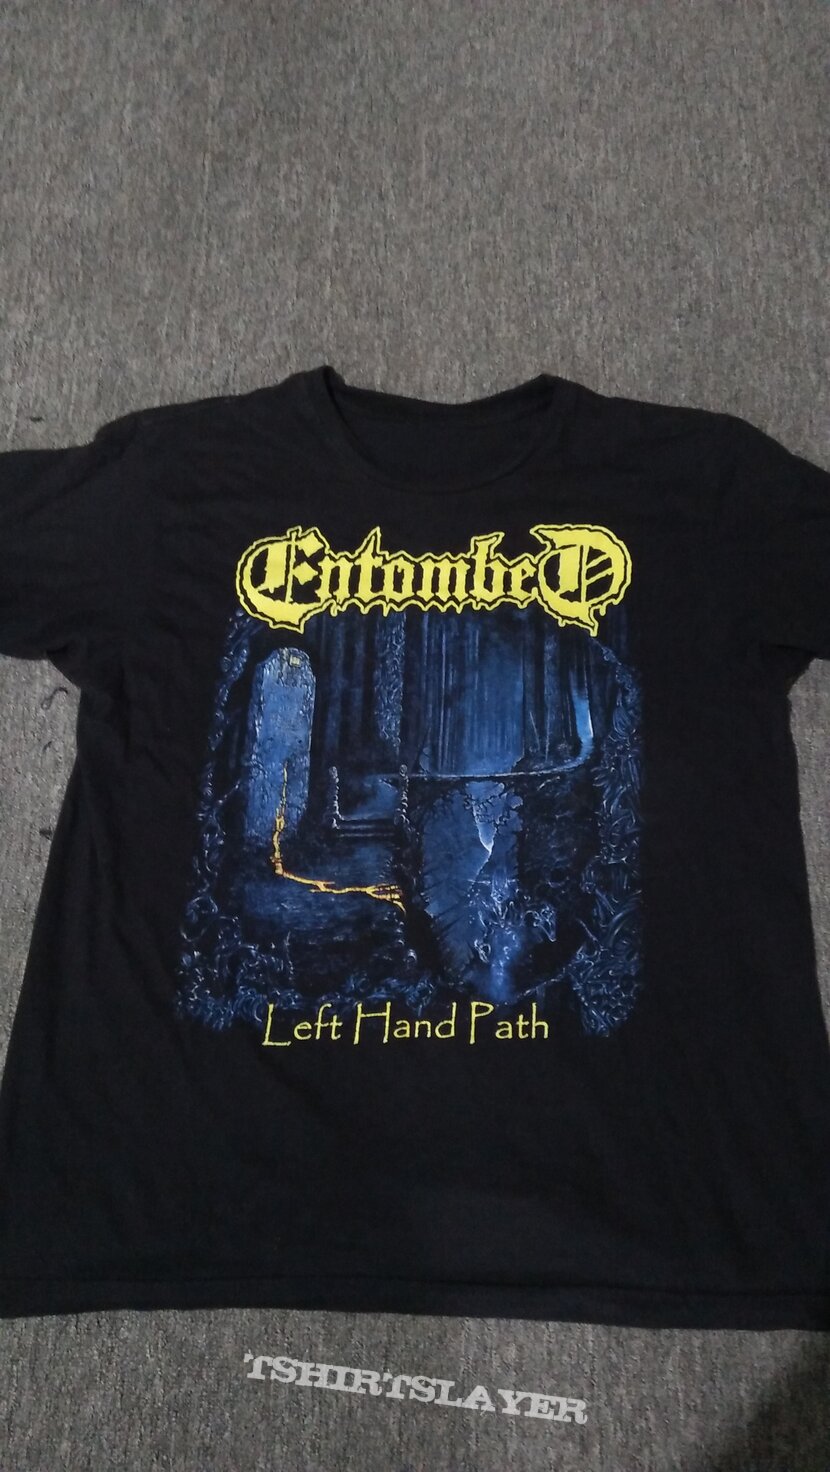 Entombed - Left Hand Path shirt